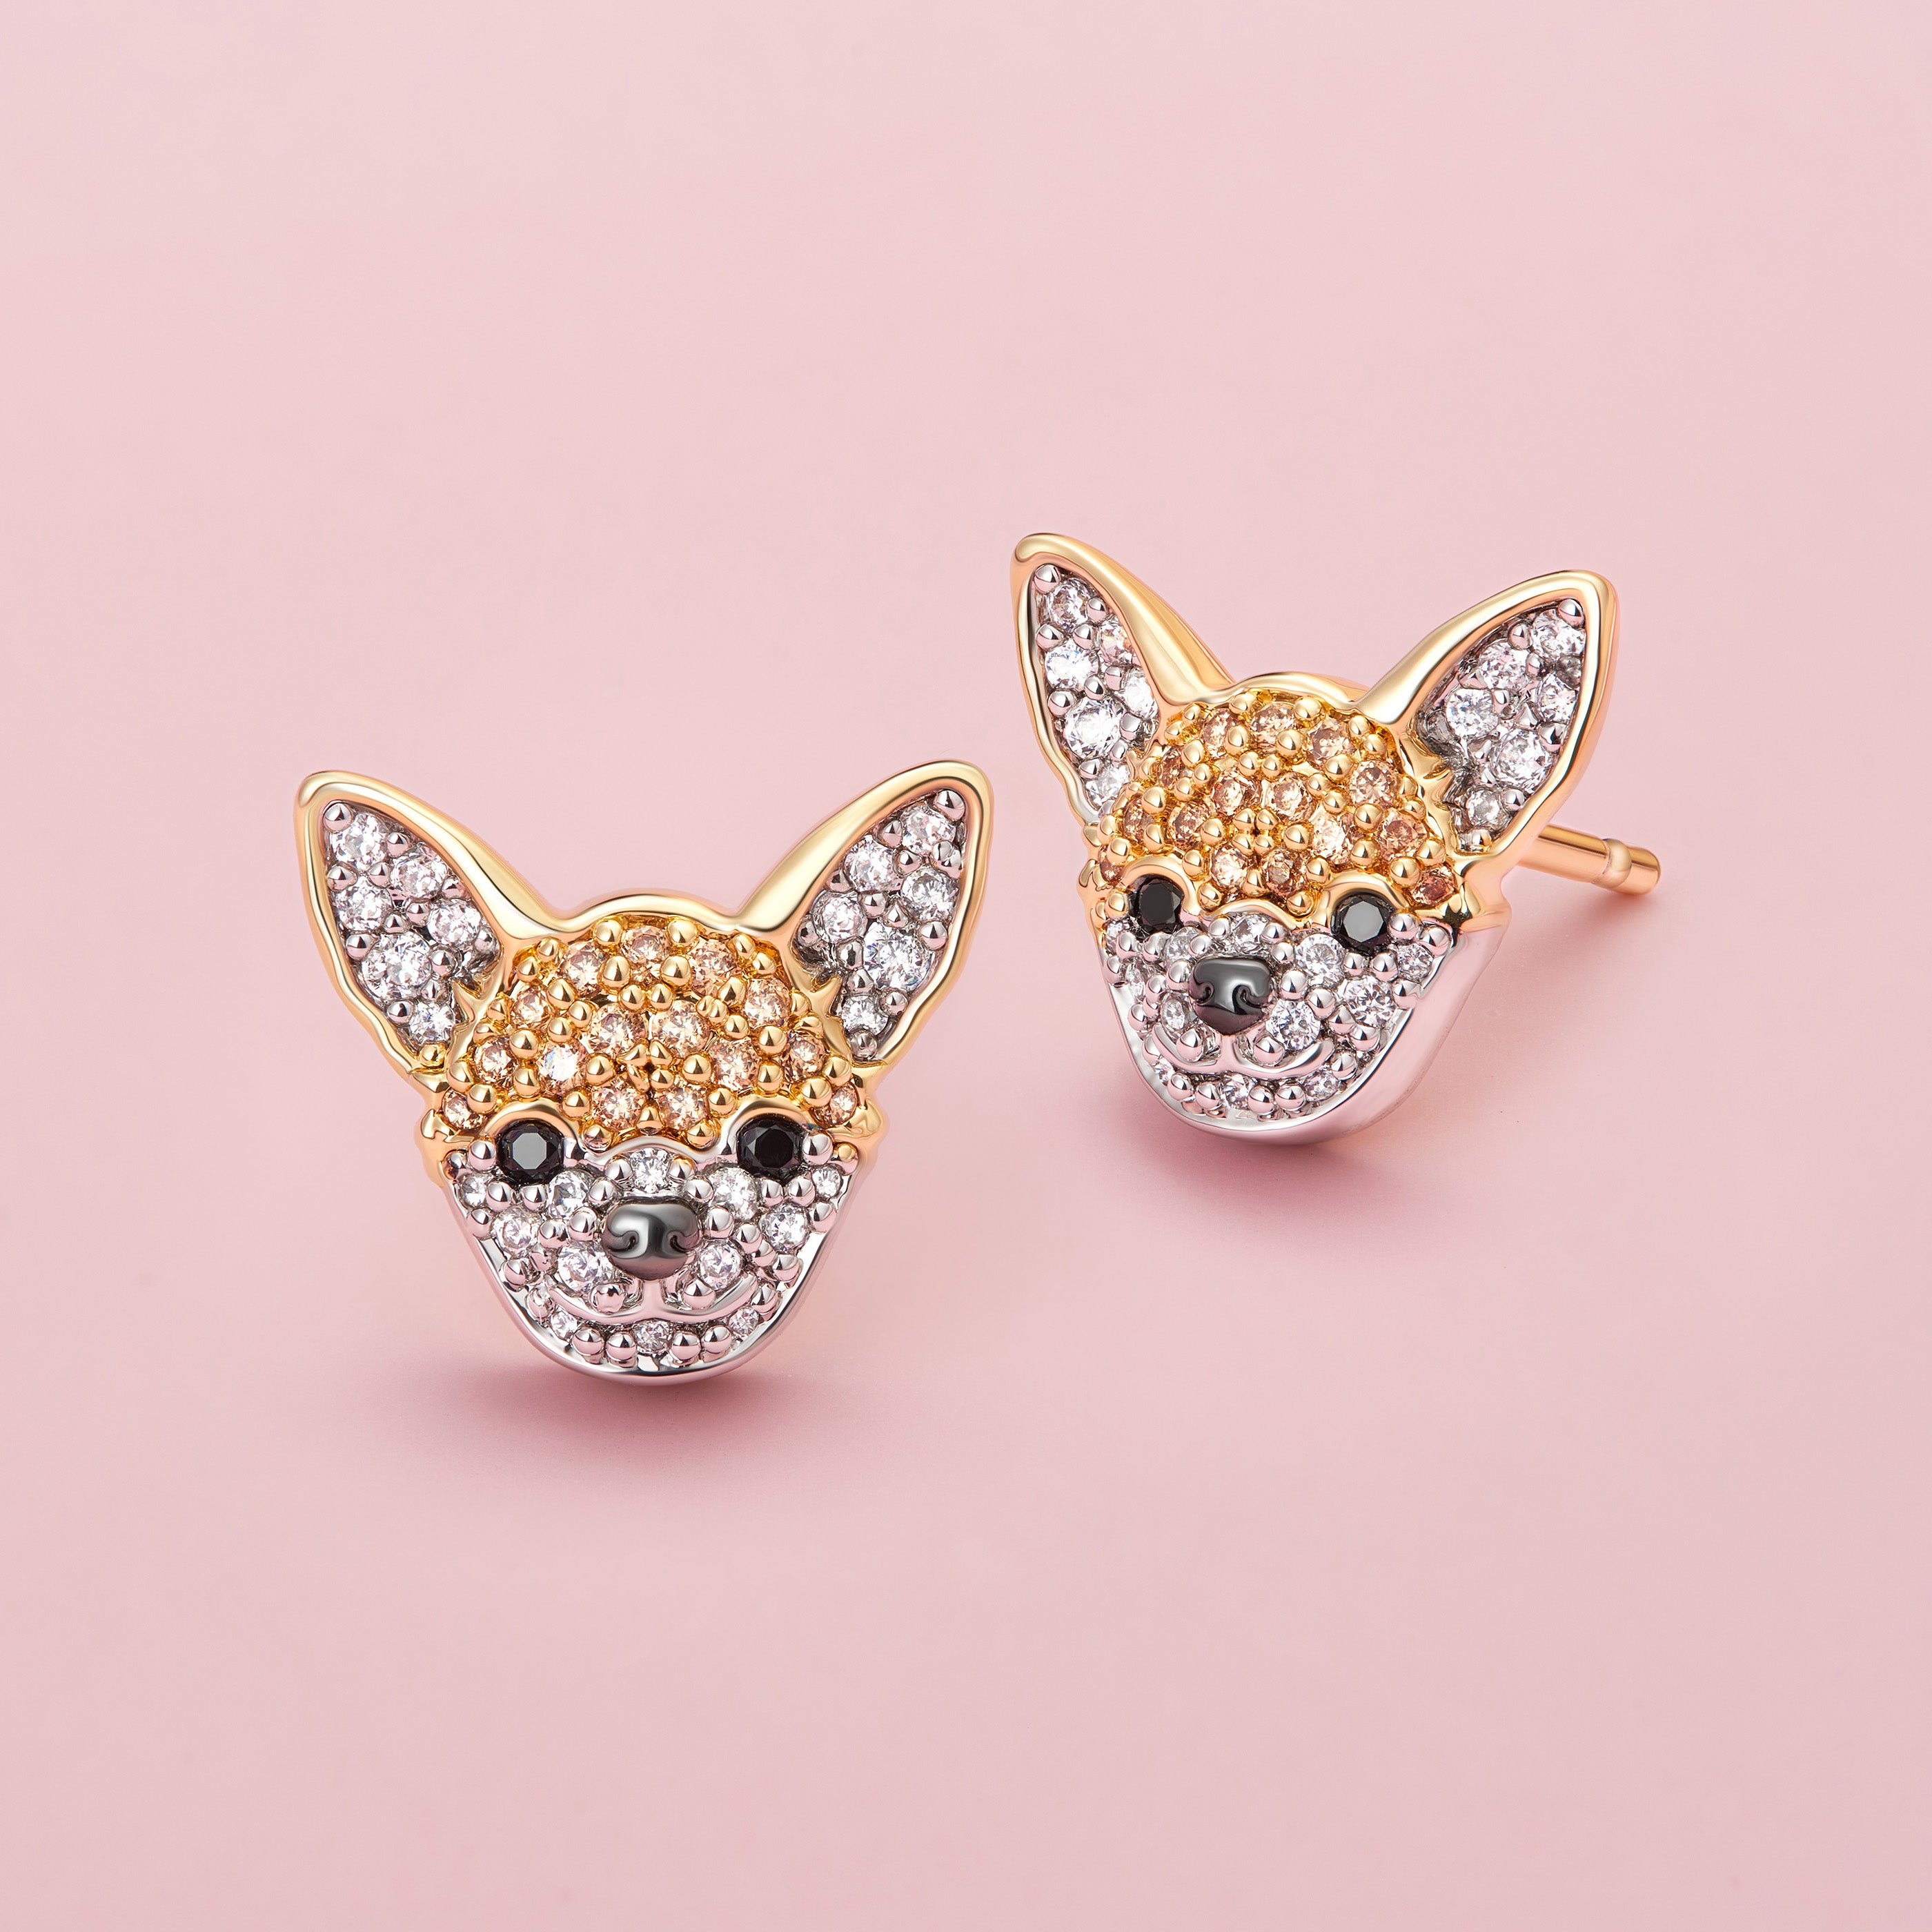 Chihuahua Sterling Silver Stud Earrings